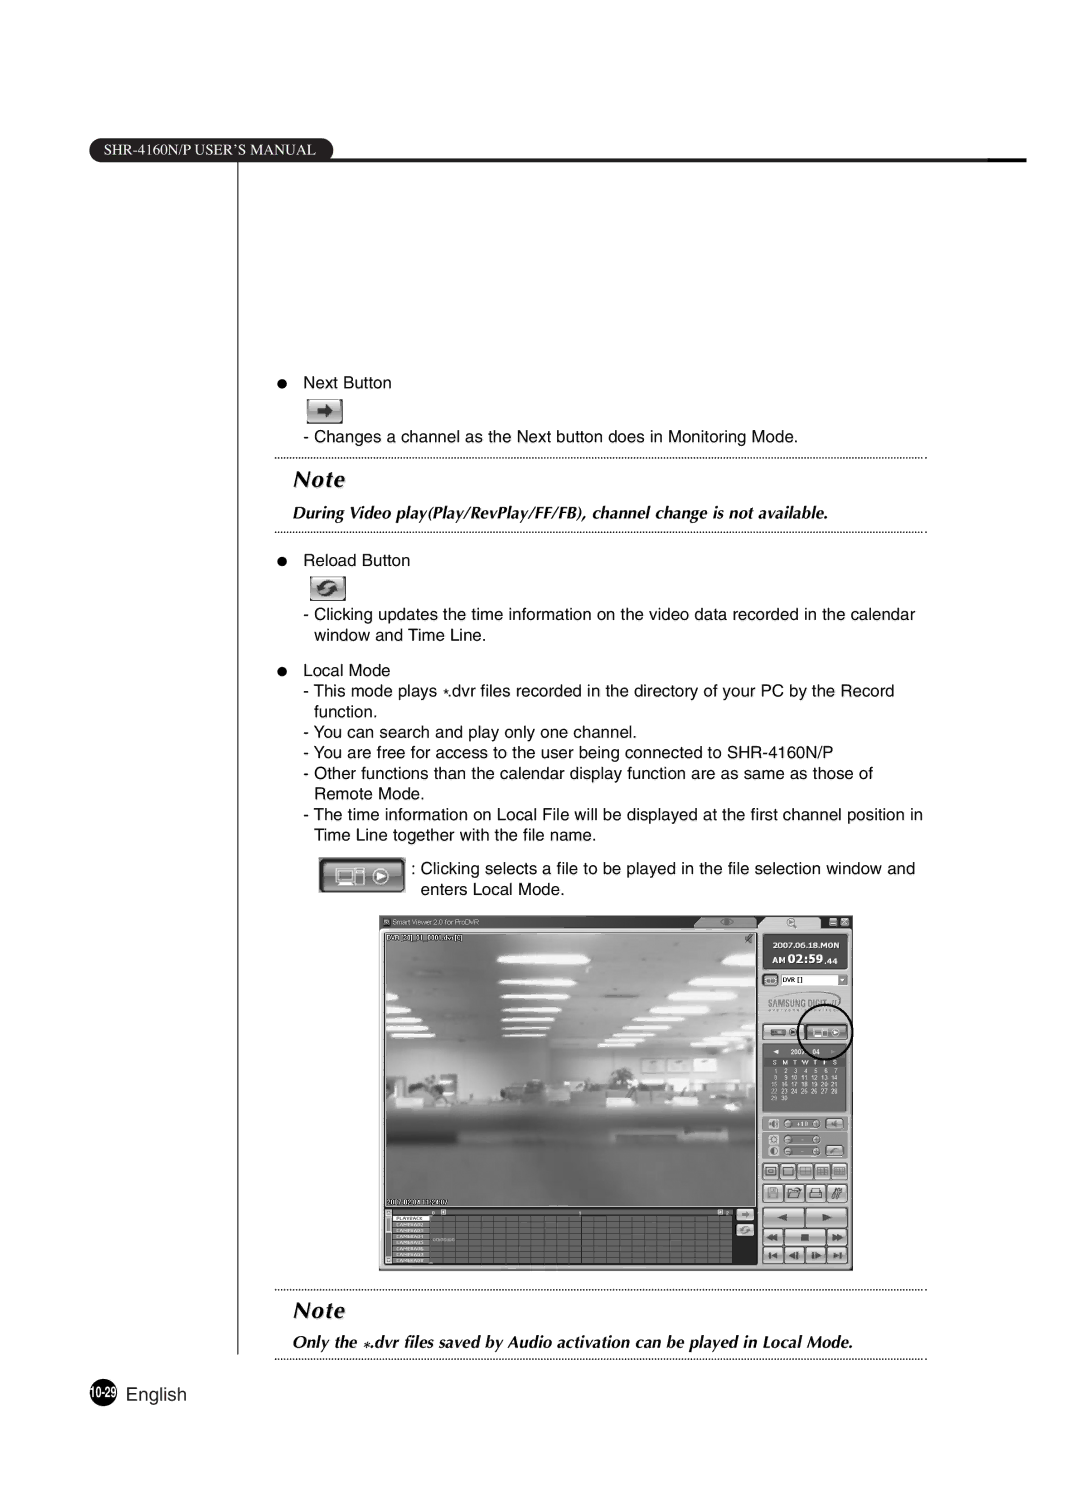 Samsung SHR-4160P manual 10-29English 